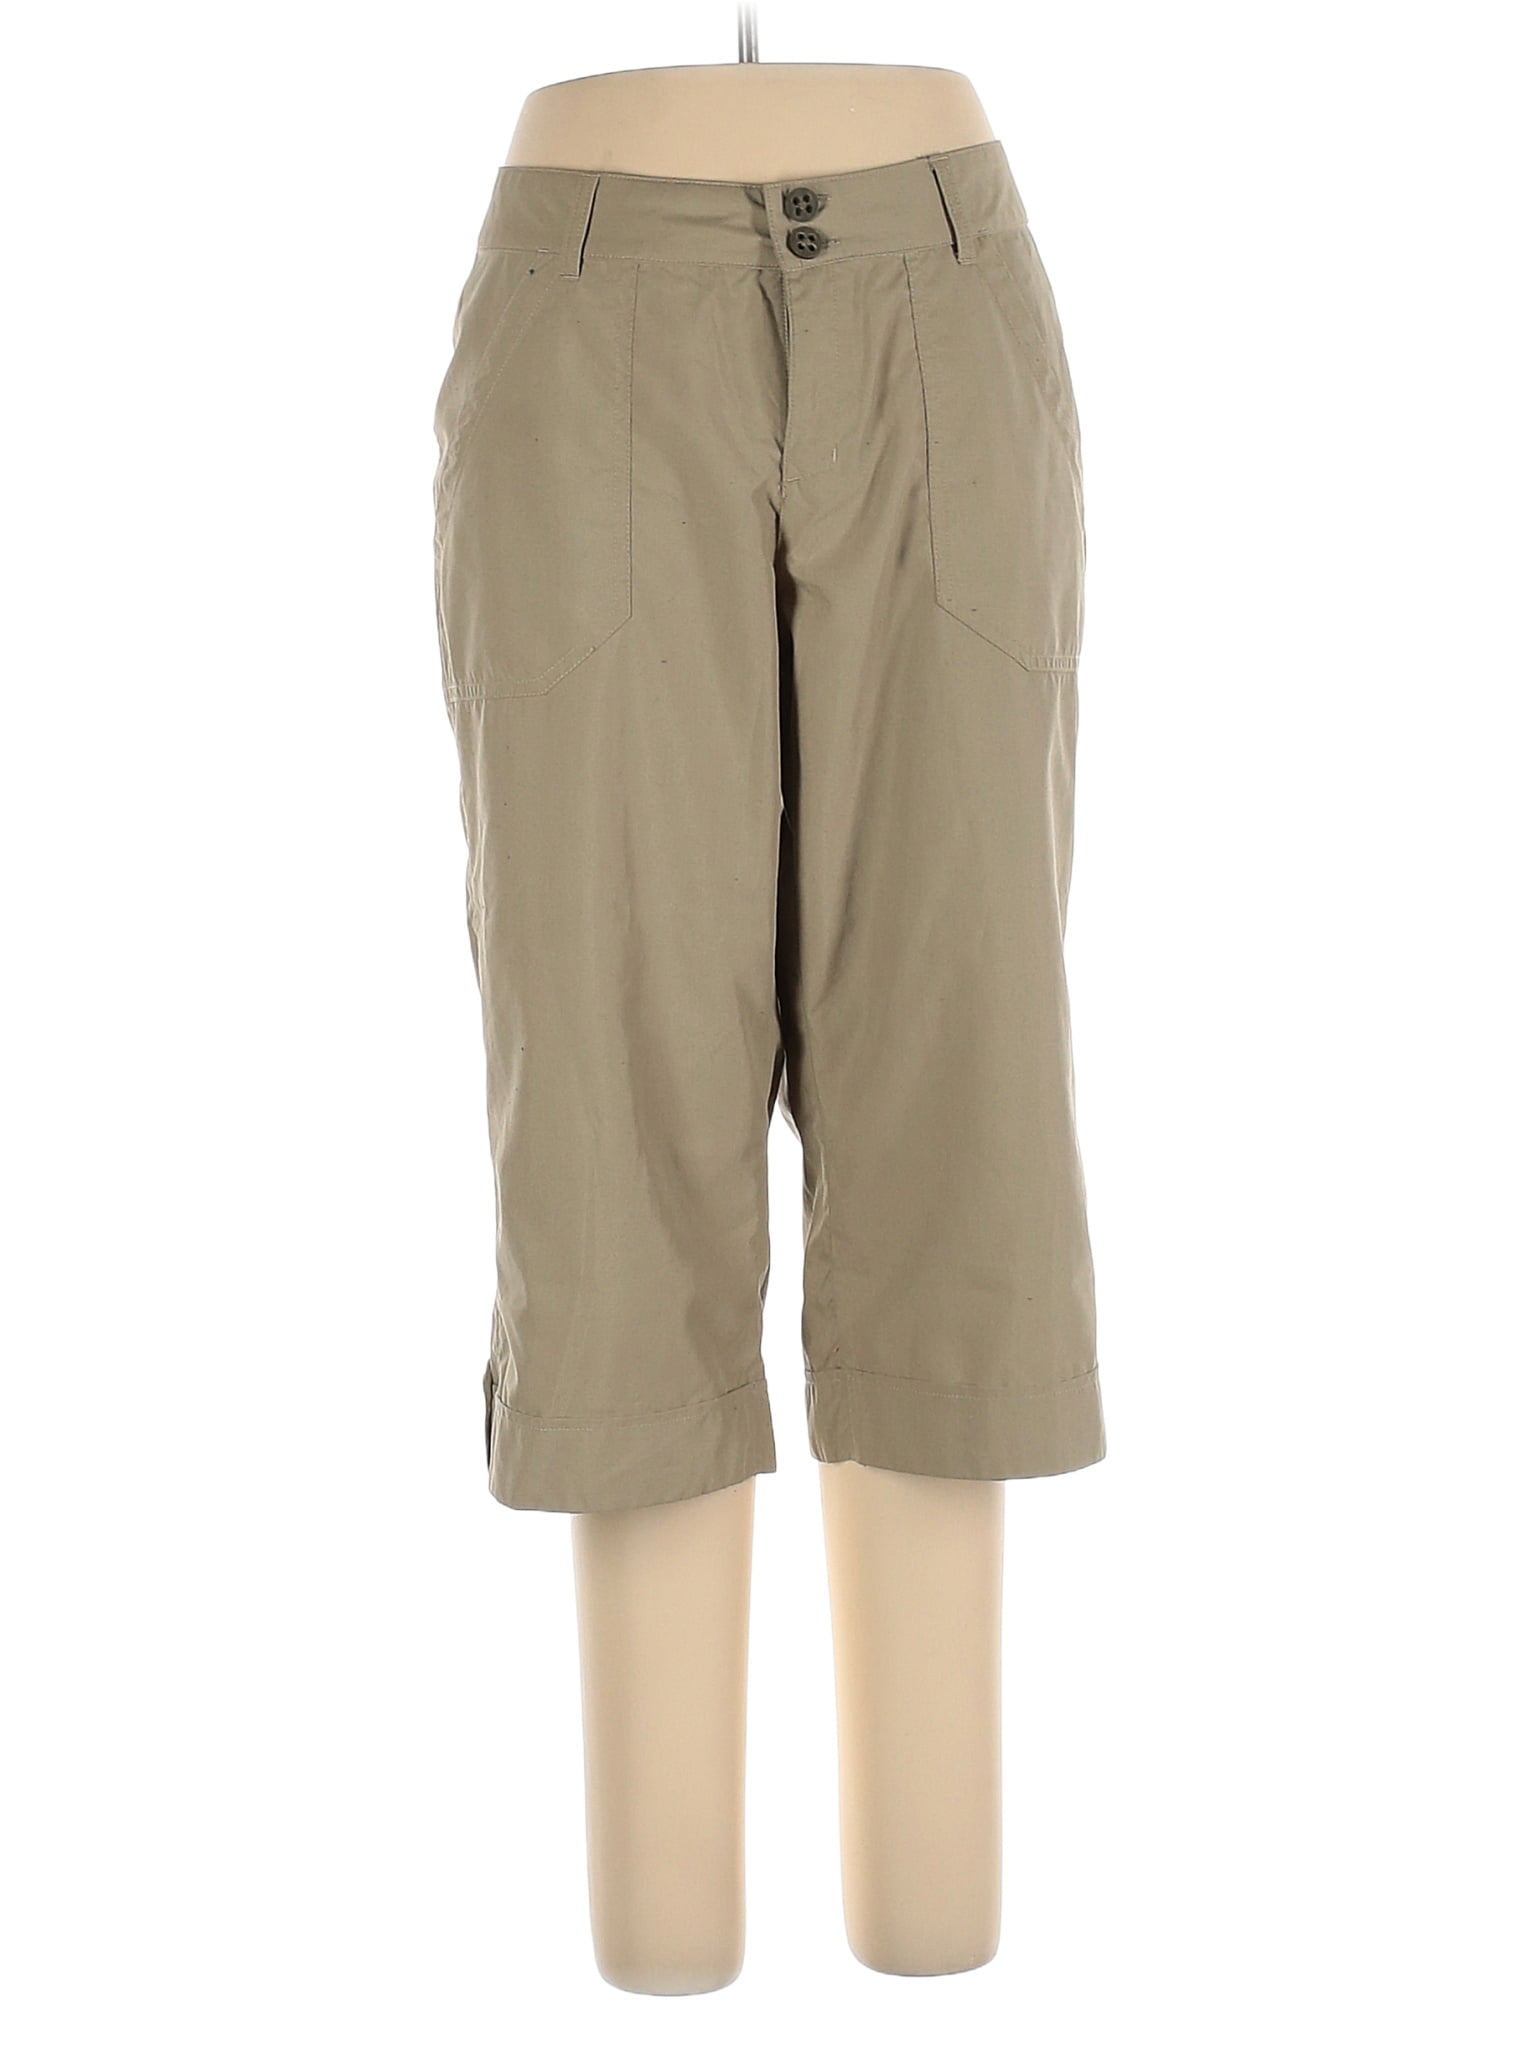 Pre-Owned Merrell Women's Size 14 Casual Pants - Walmart.com